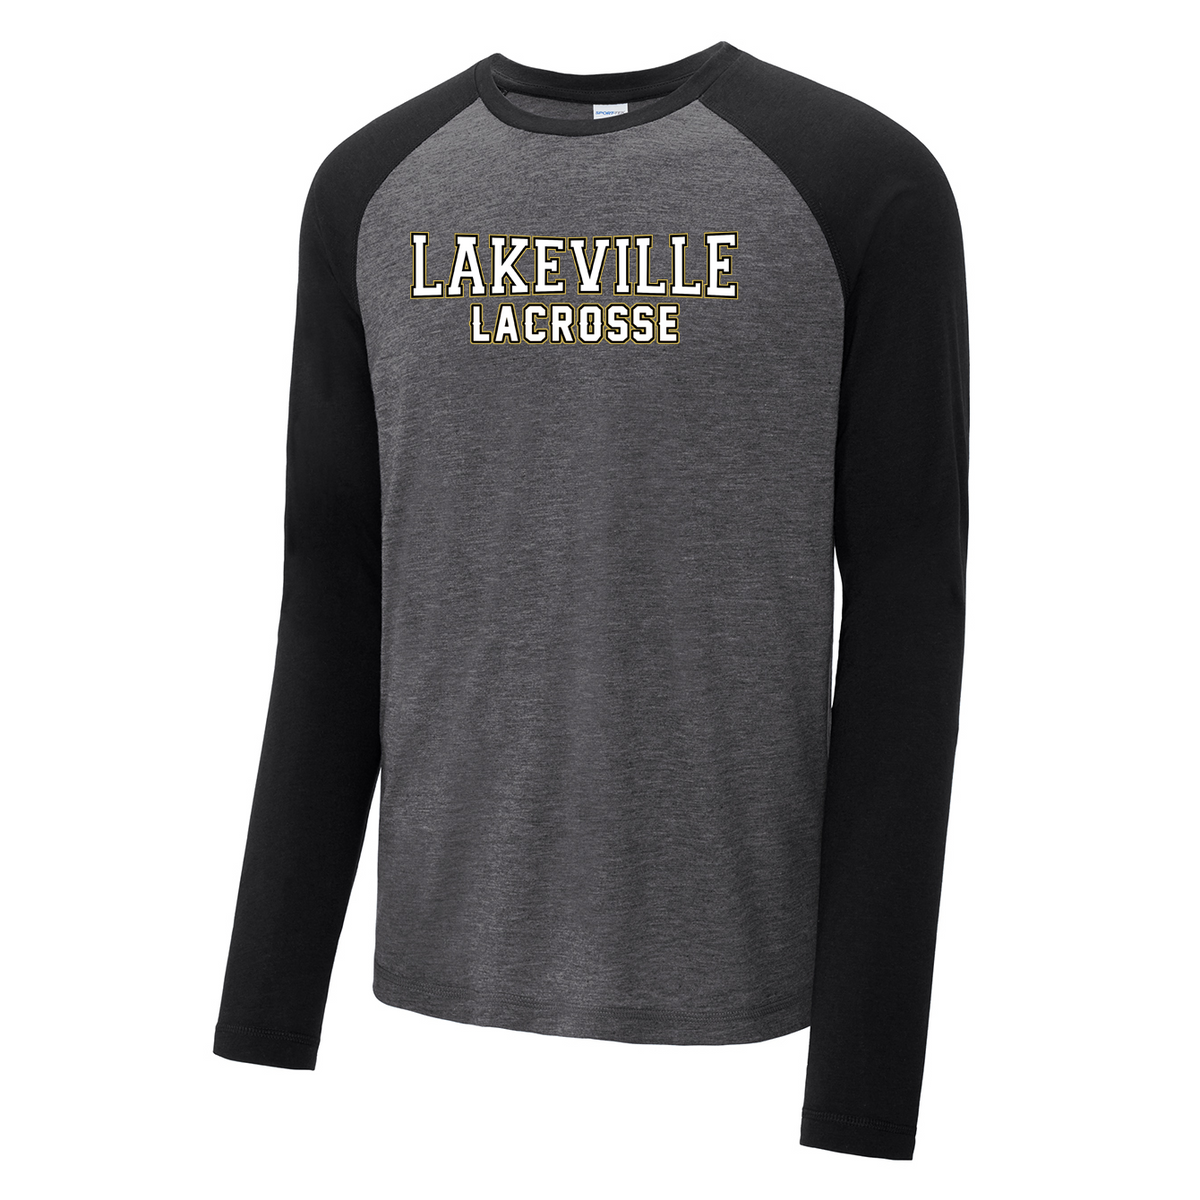 Lakeville Lacrosse Long Sleeve Raglan CottonTouch